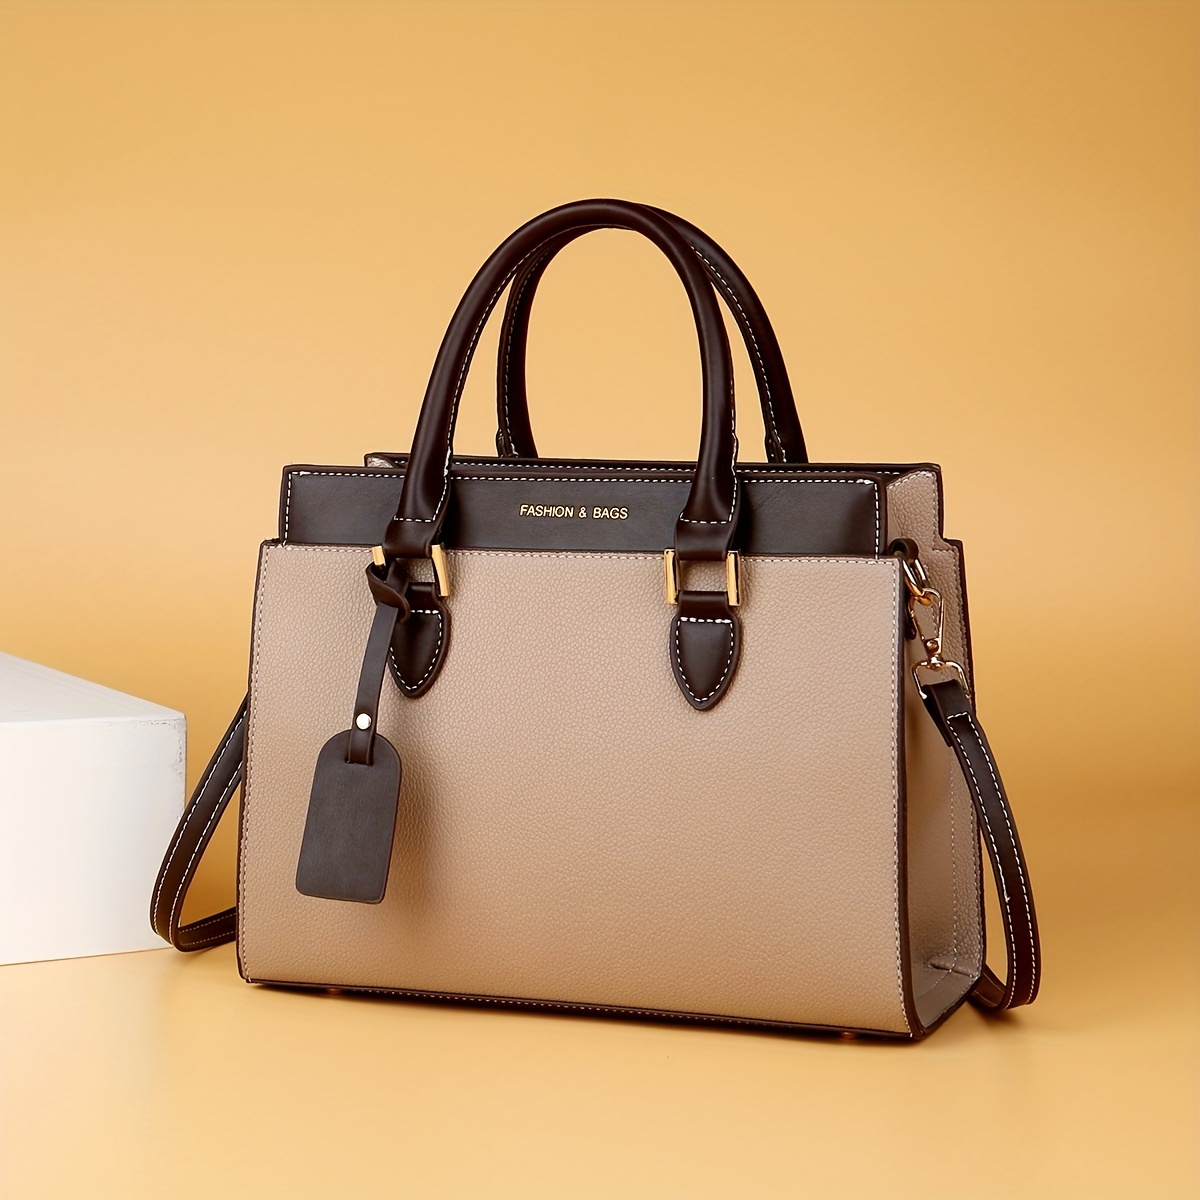 

Classic Textured Square Satchel Bag, Color Contrast Top Handle Bag, Elegant Minimalist Commuter Women's Handbag Purse